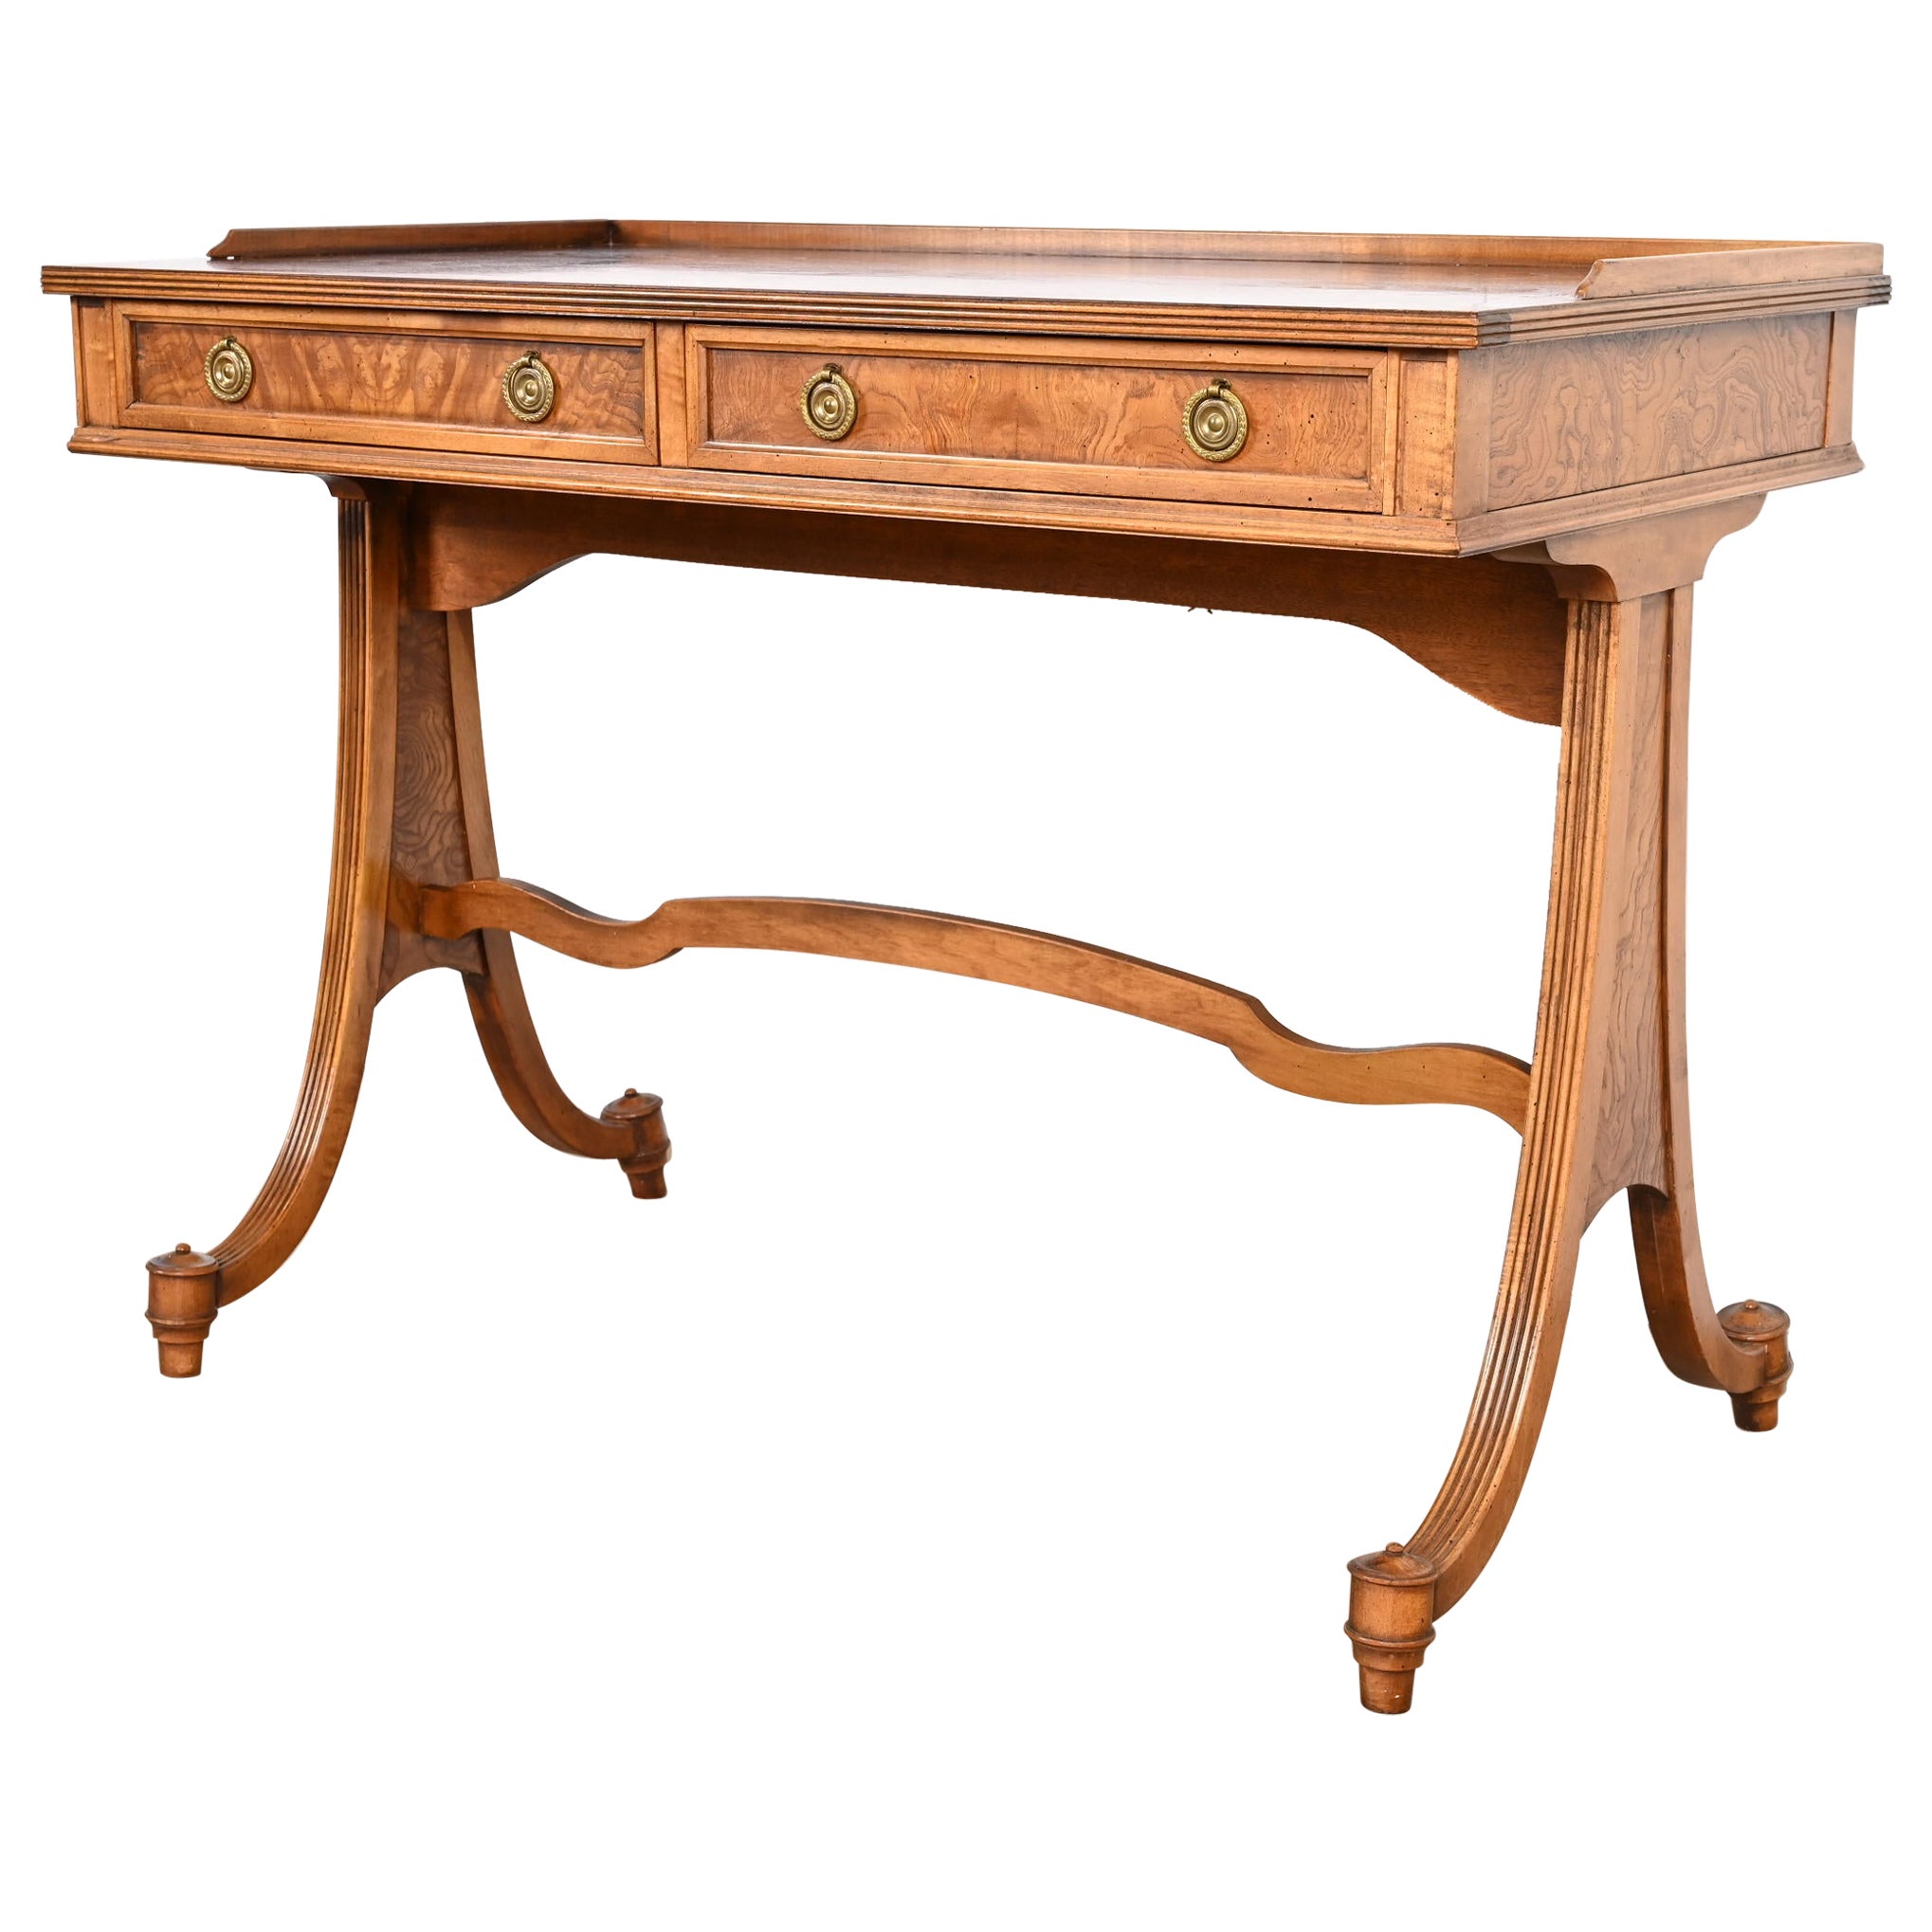 Baker Furniture English Regency Burled Walnut Writing Desk or Console Table